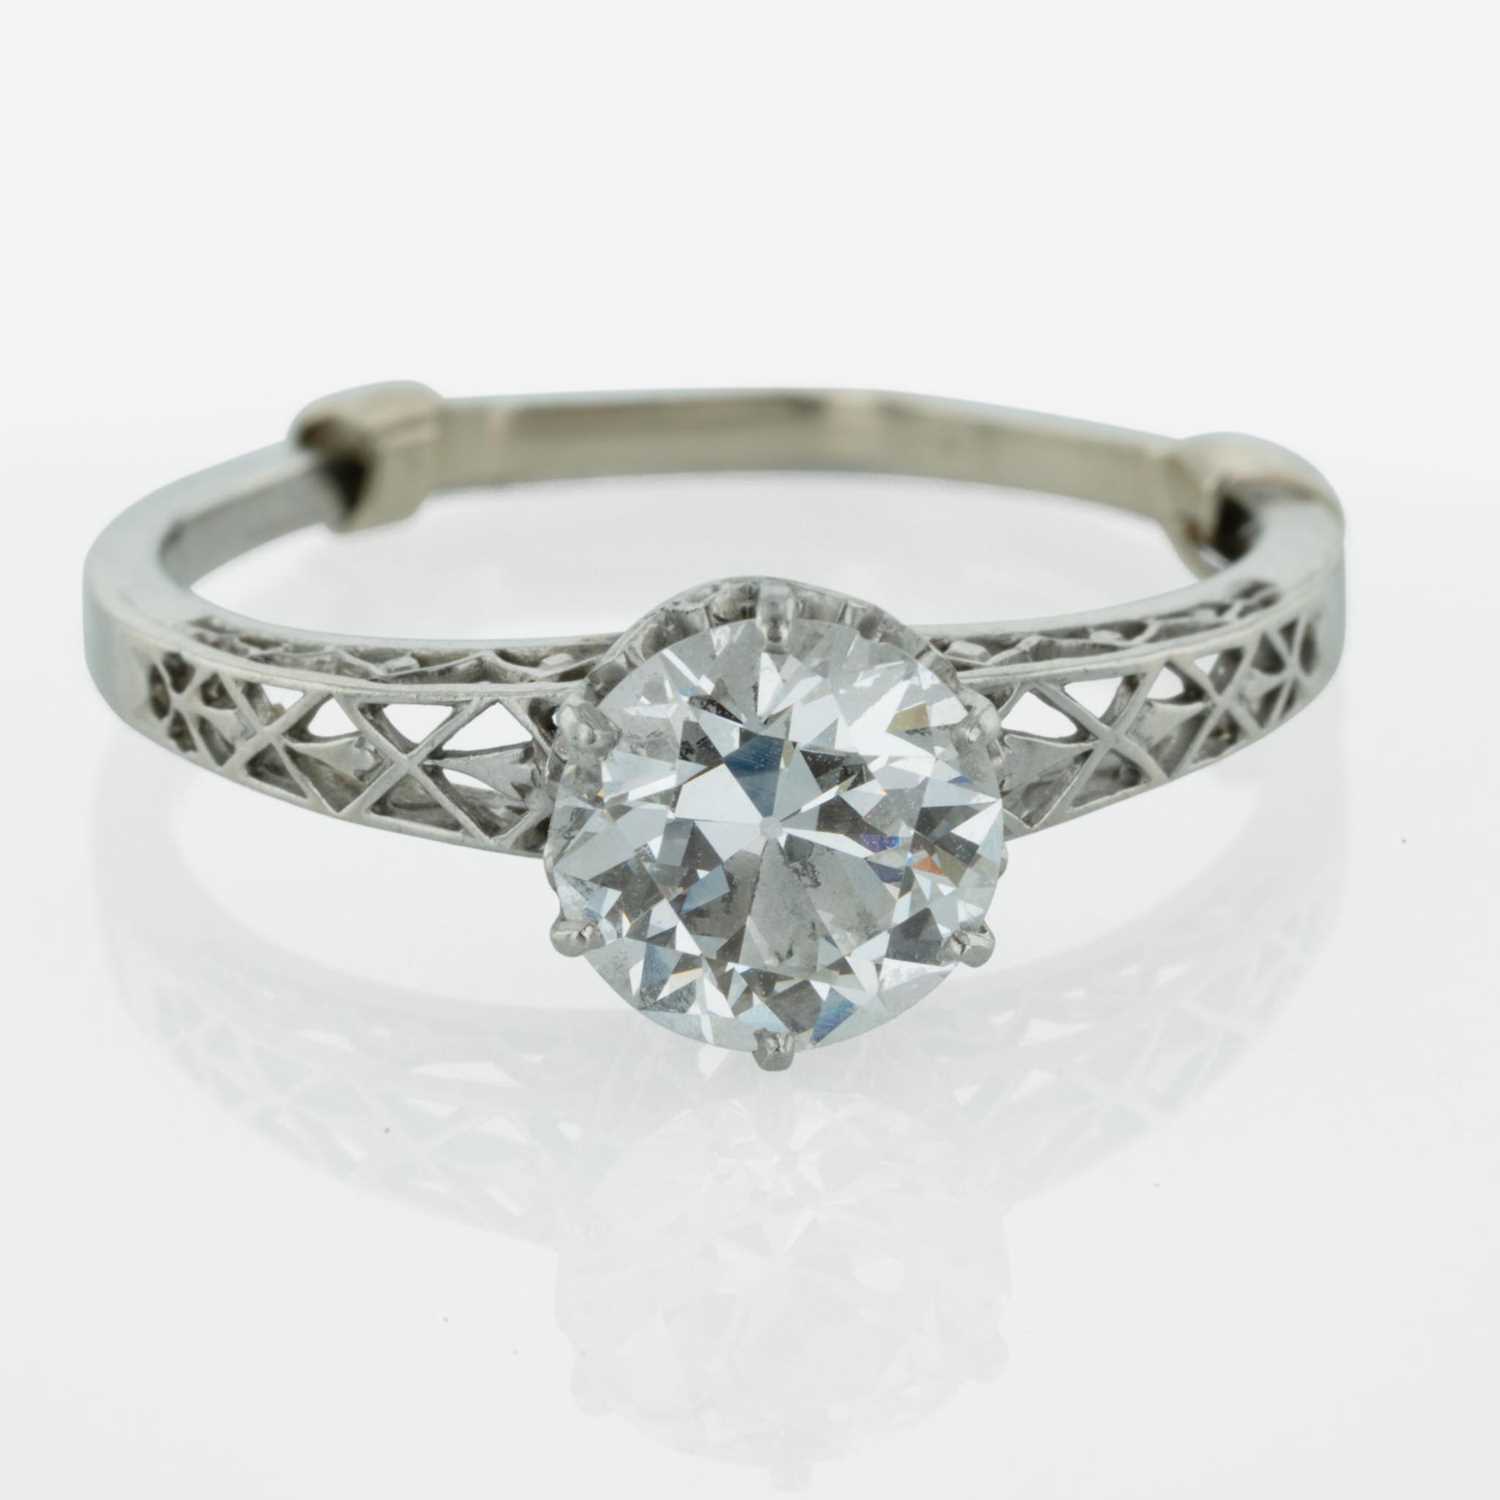 Lot 208 - A Platinum and Diamond Ring